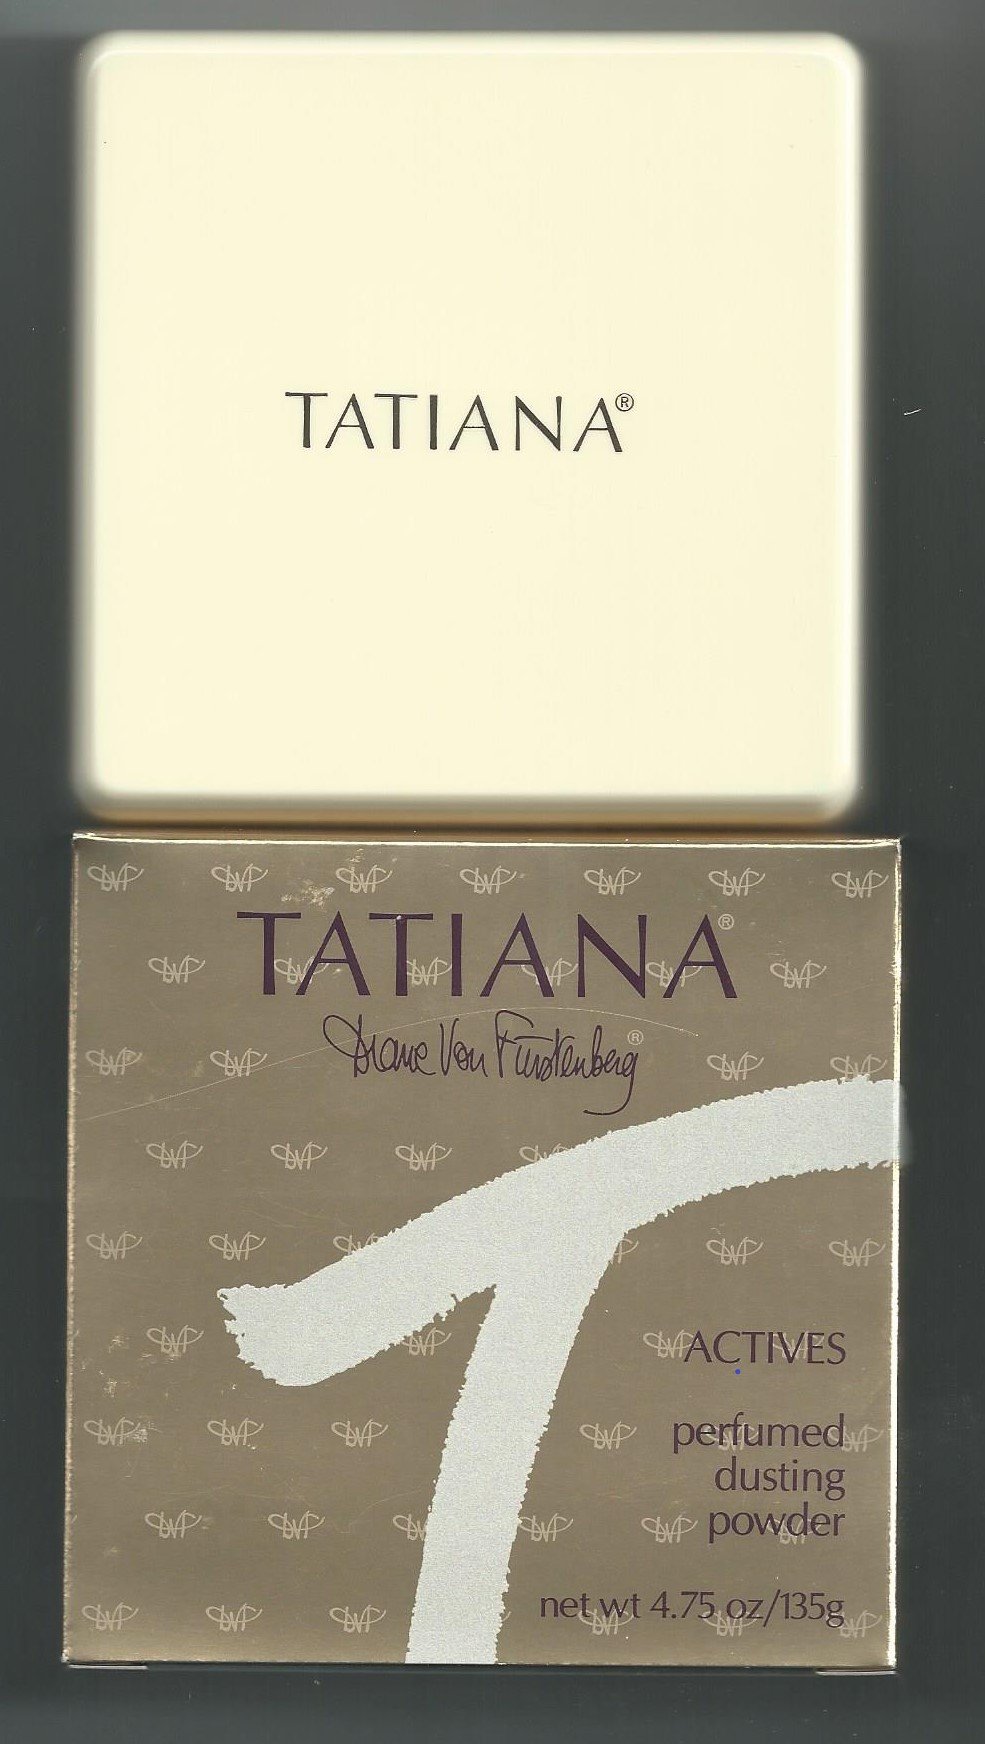 Tatiana Actives Perfume Dusting Powder/Diane Von Furstenberg